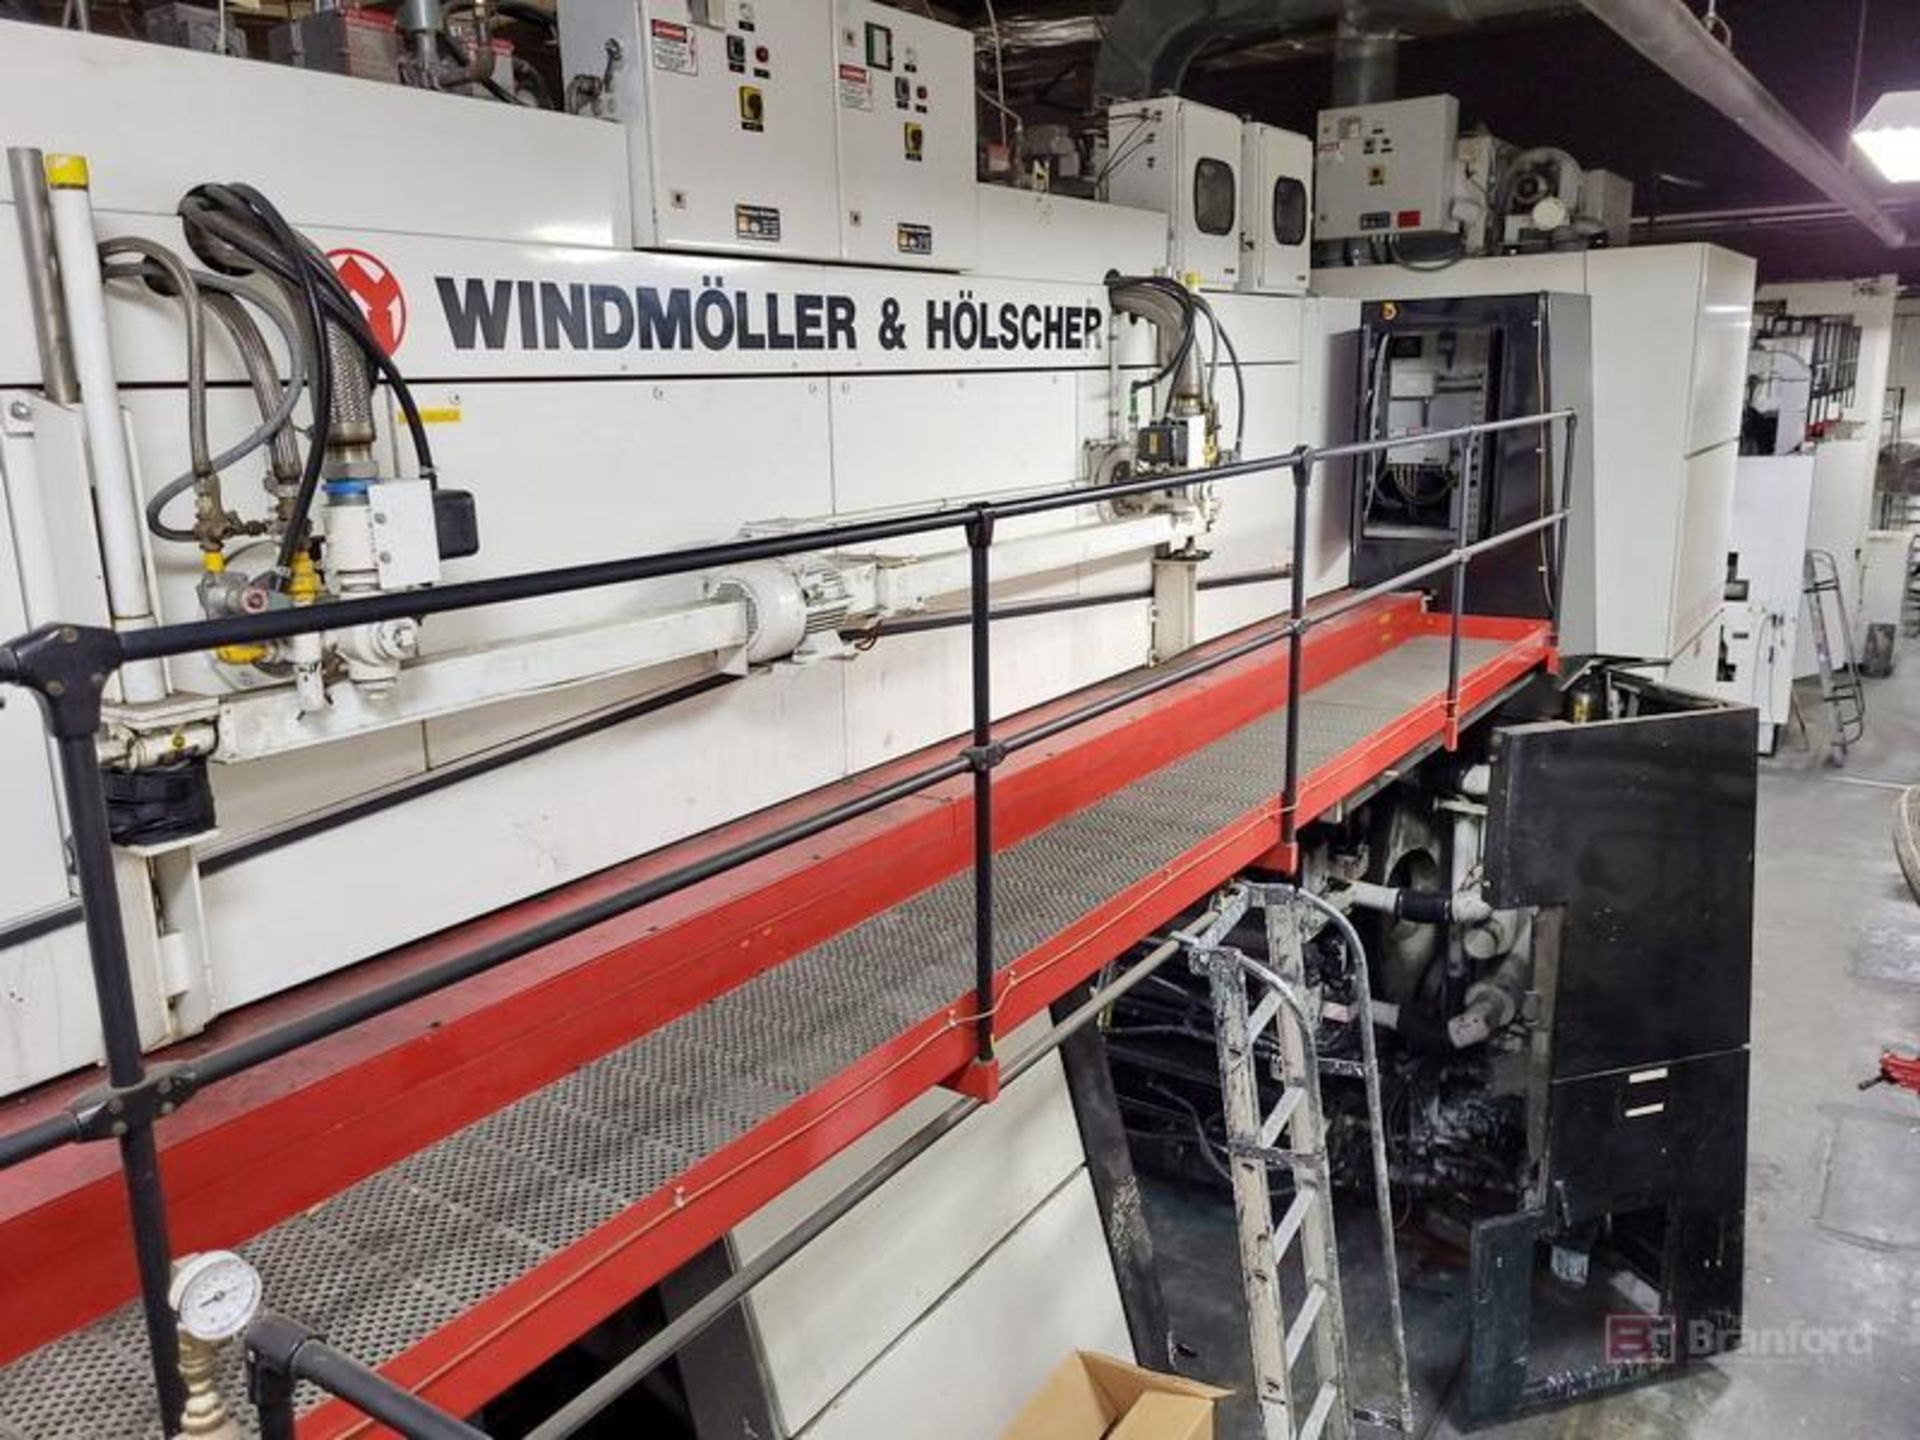 Windmoeller & Hoelscher (W&H) Olympia Starflex 8-Color Printing Press - Image 10 of 31